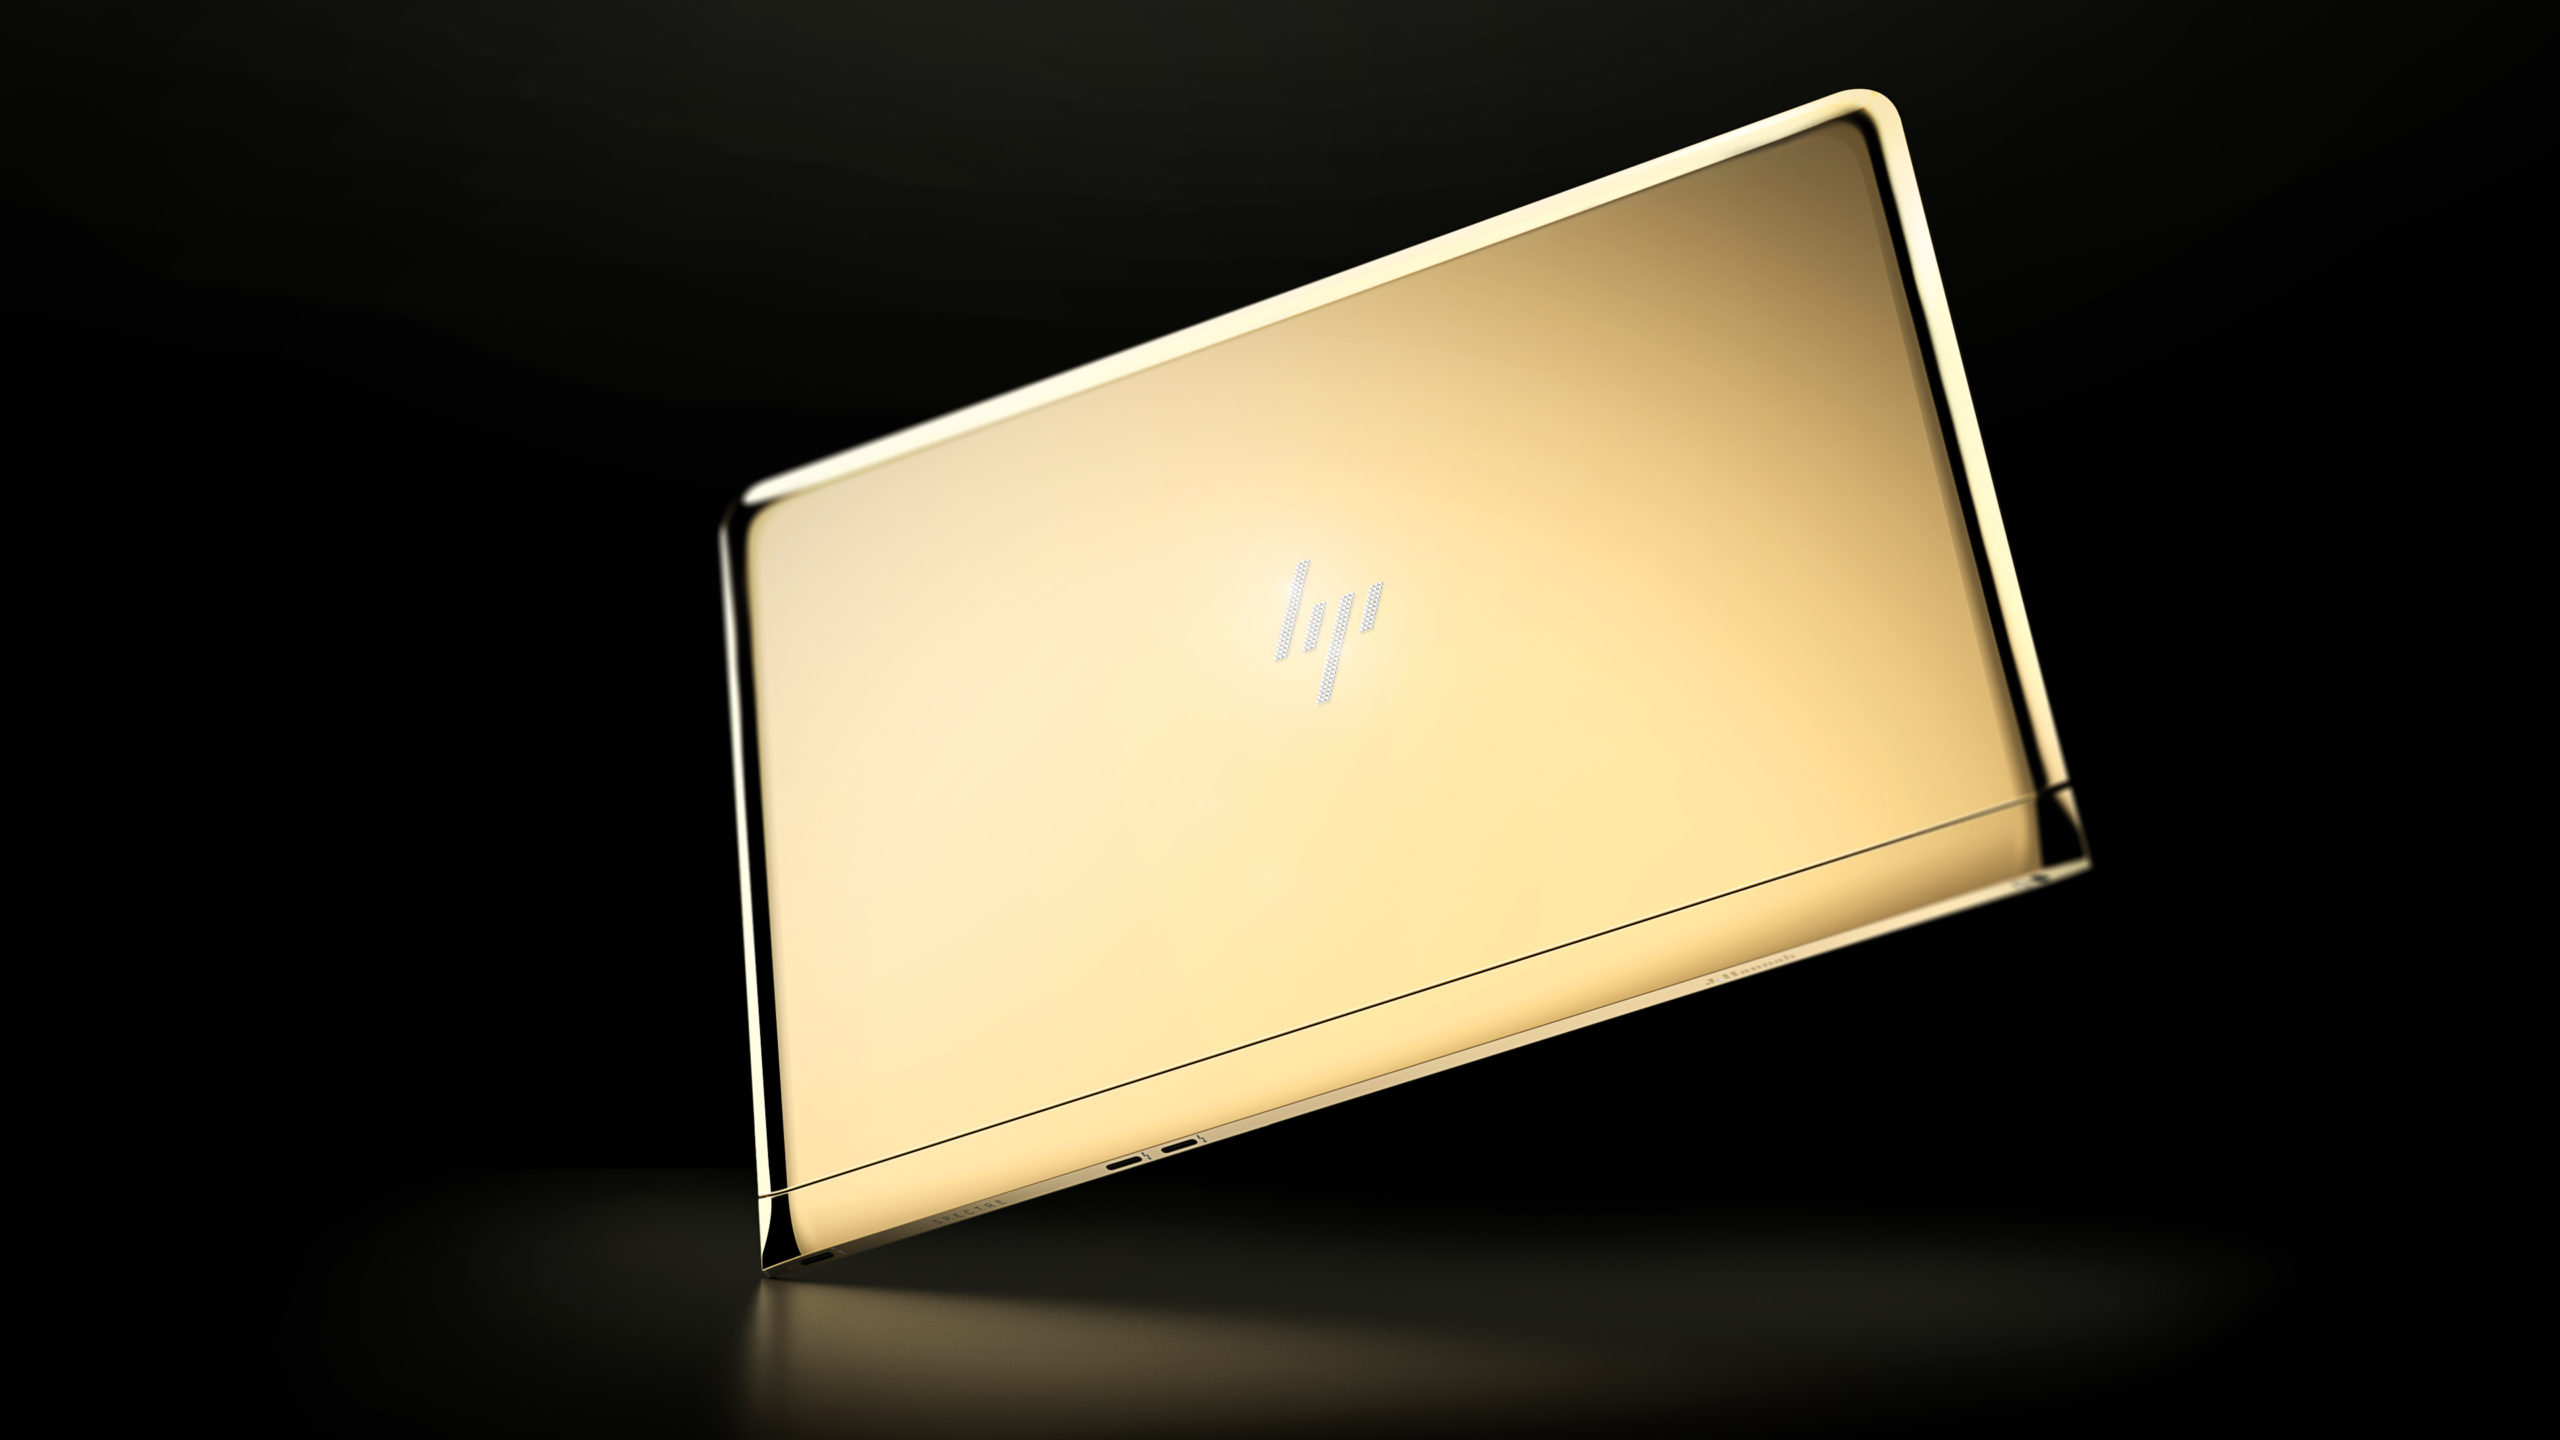 HP Spectre Laptop: Hands On